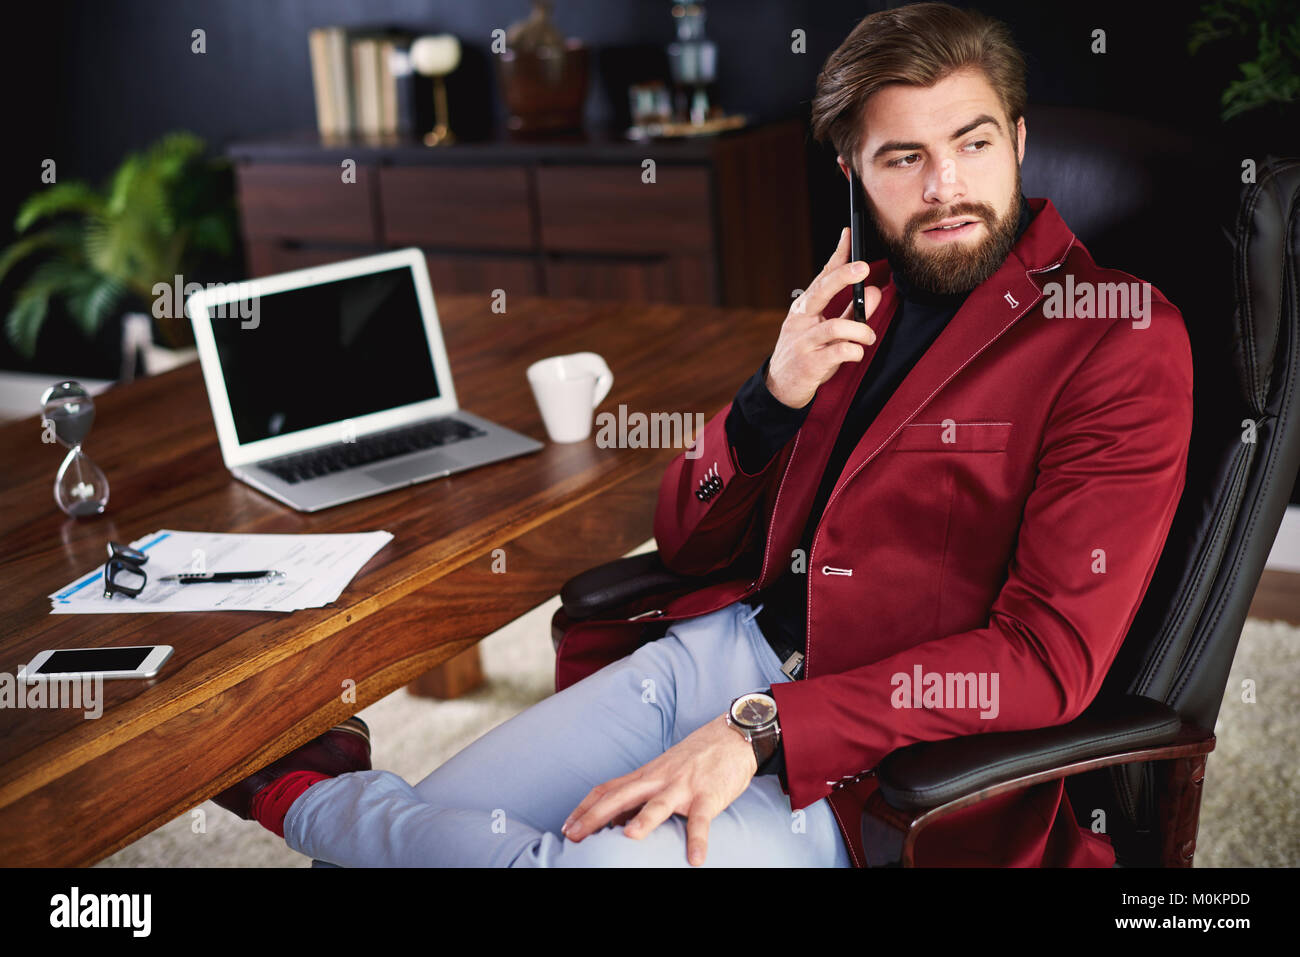 Business Person per Telefon mit Home Office Stockfoto